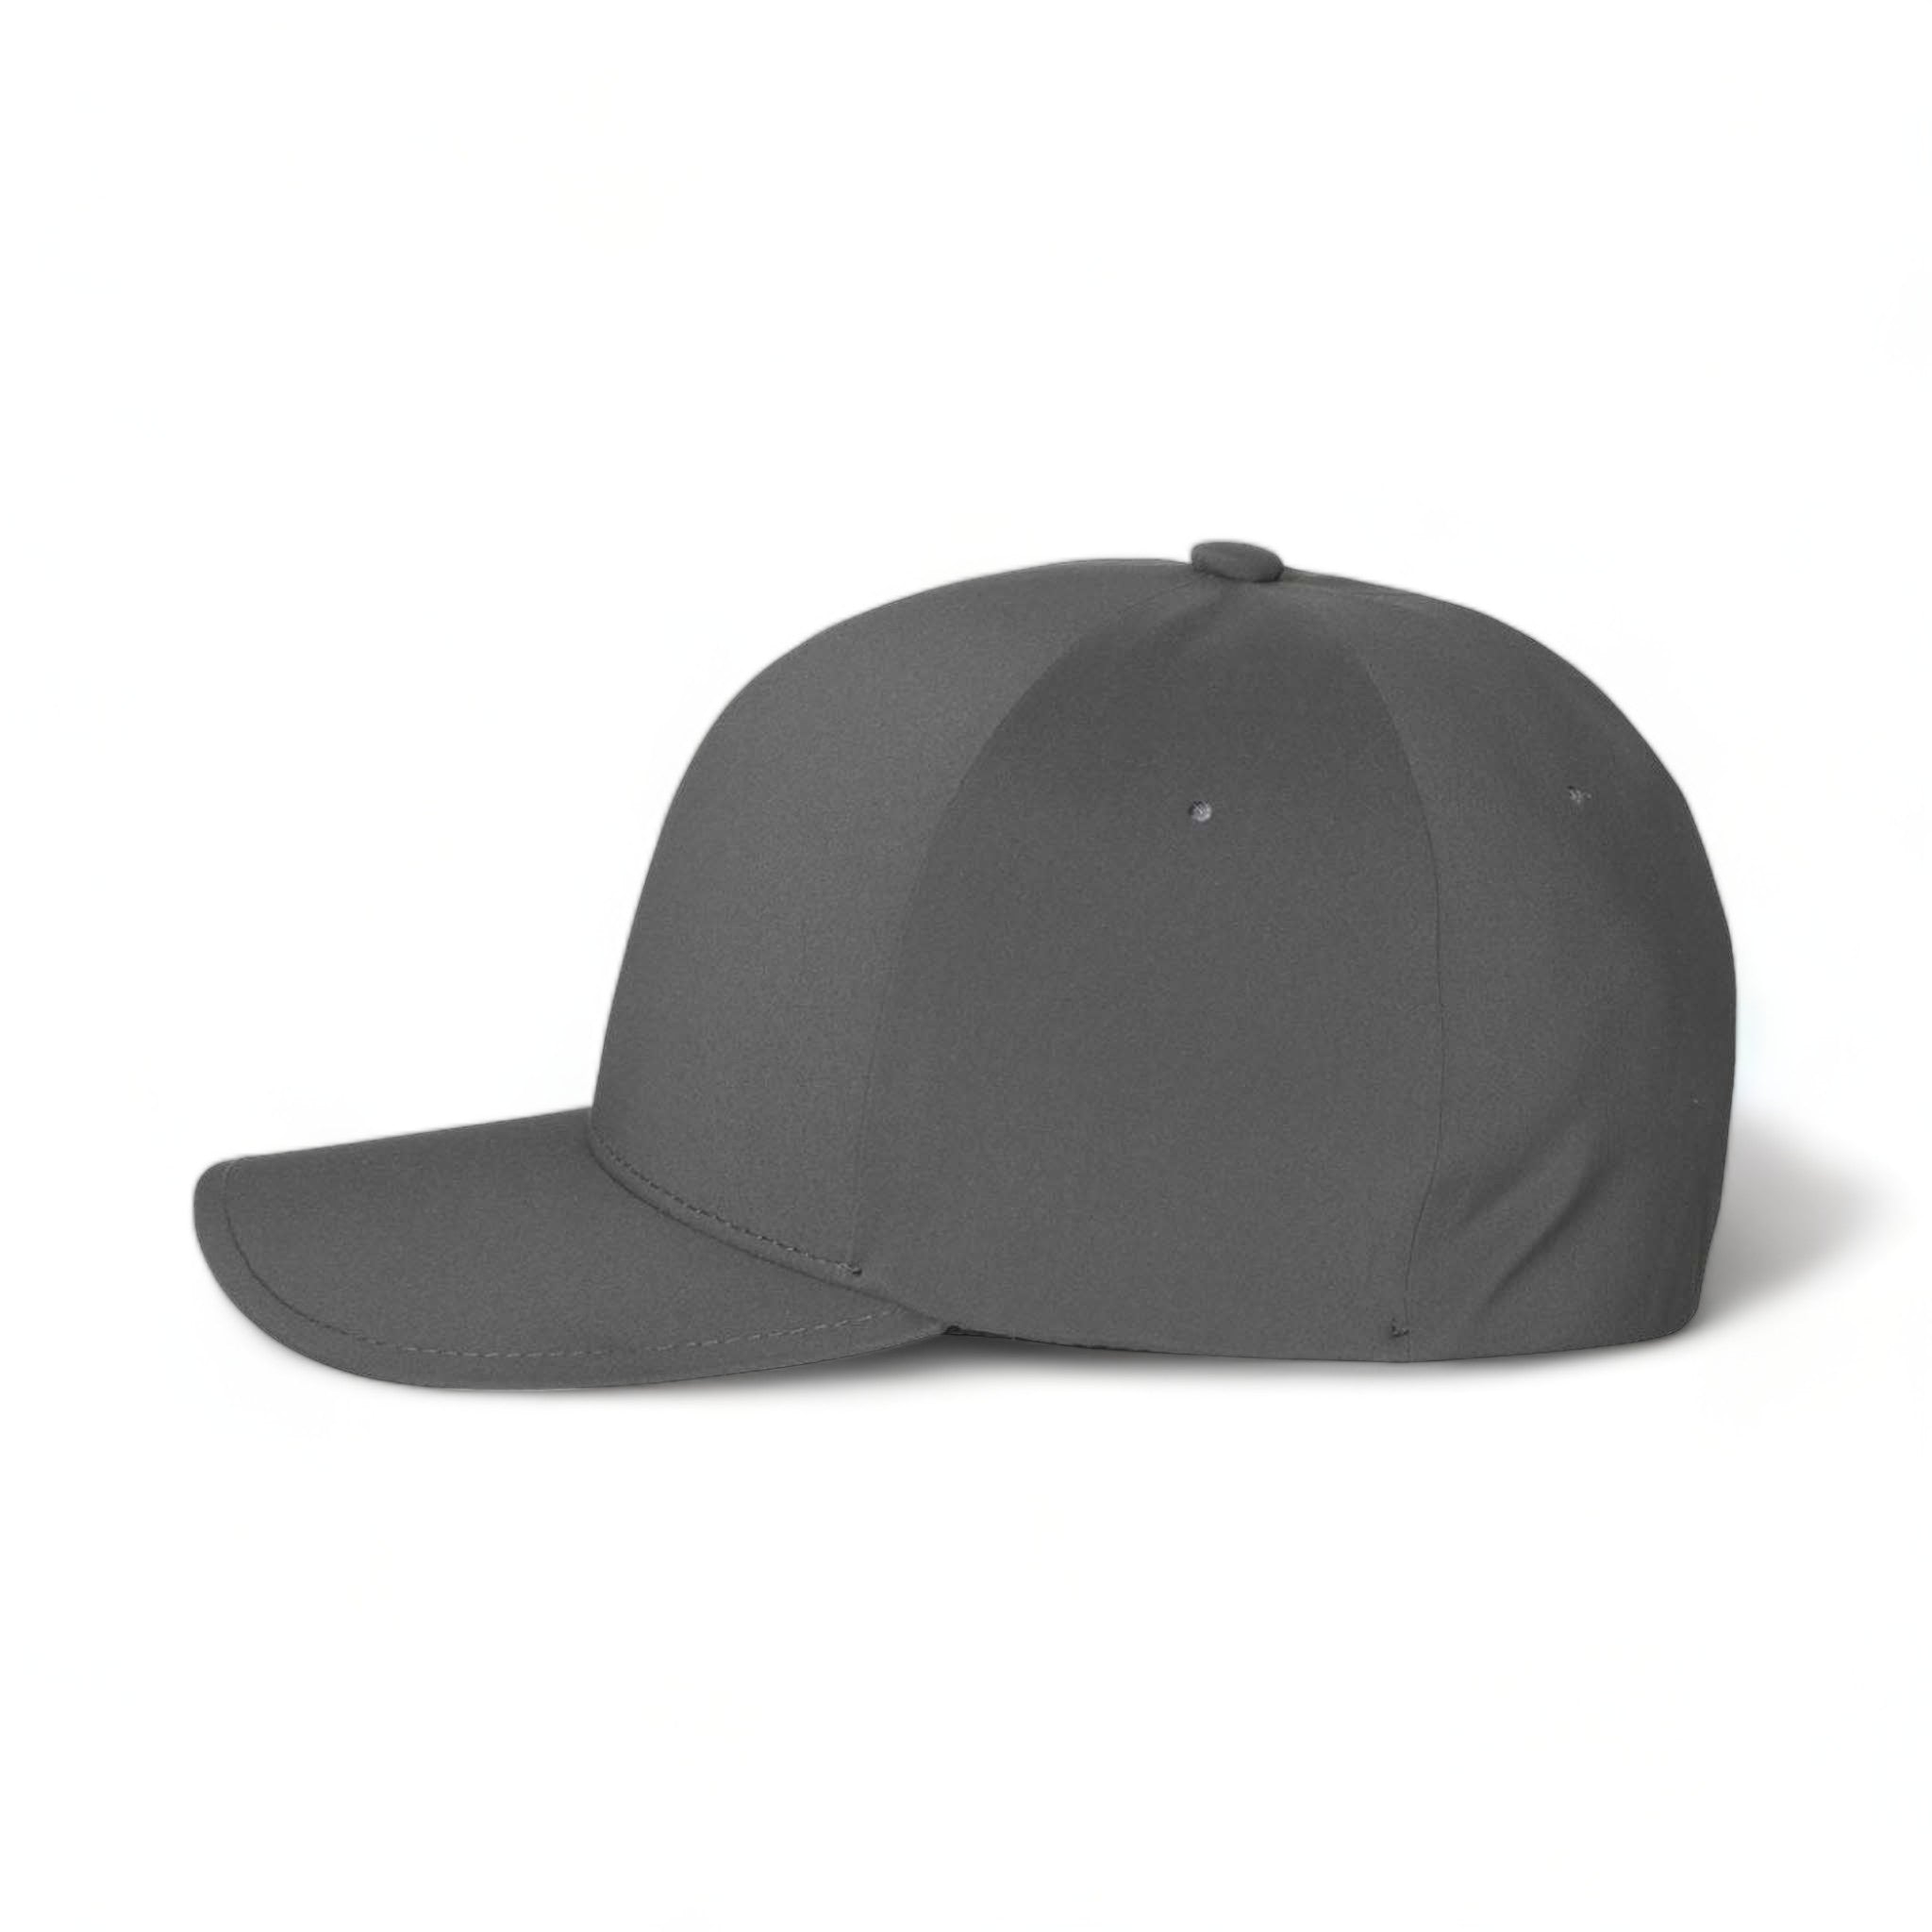 Side view of Flexfit 180 custom hat in dark grey